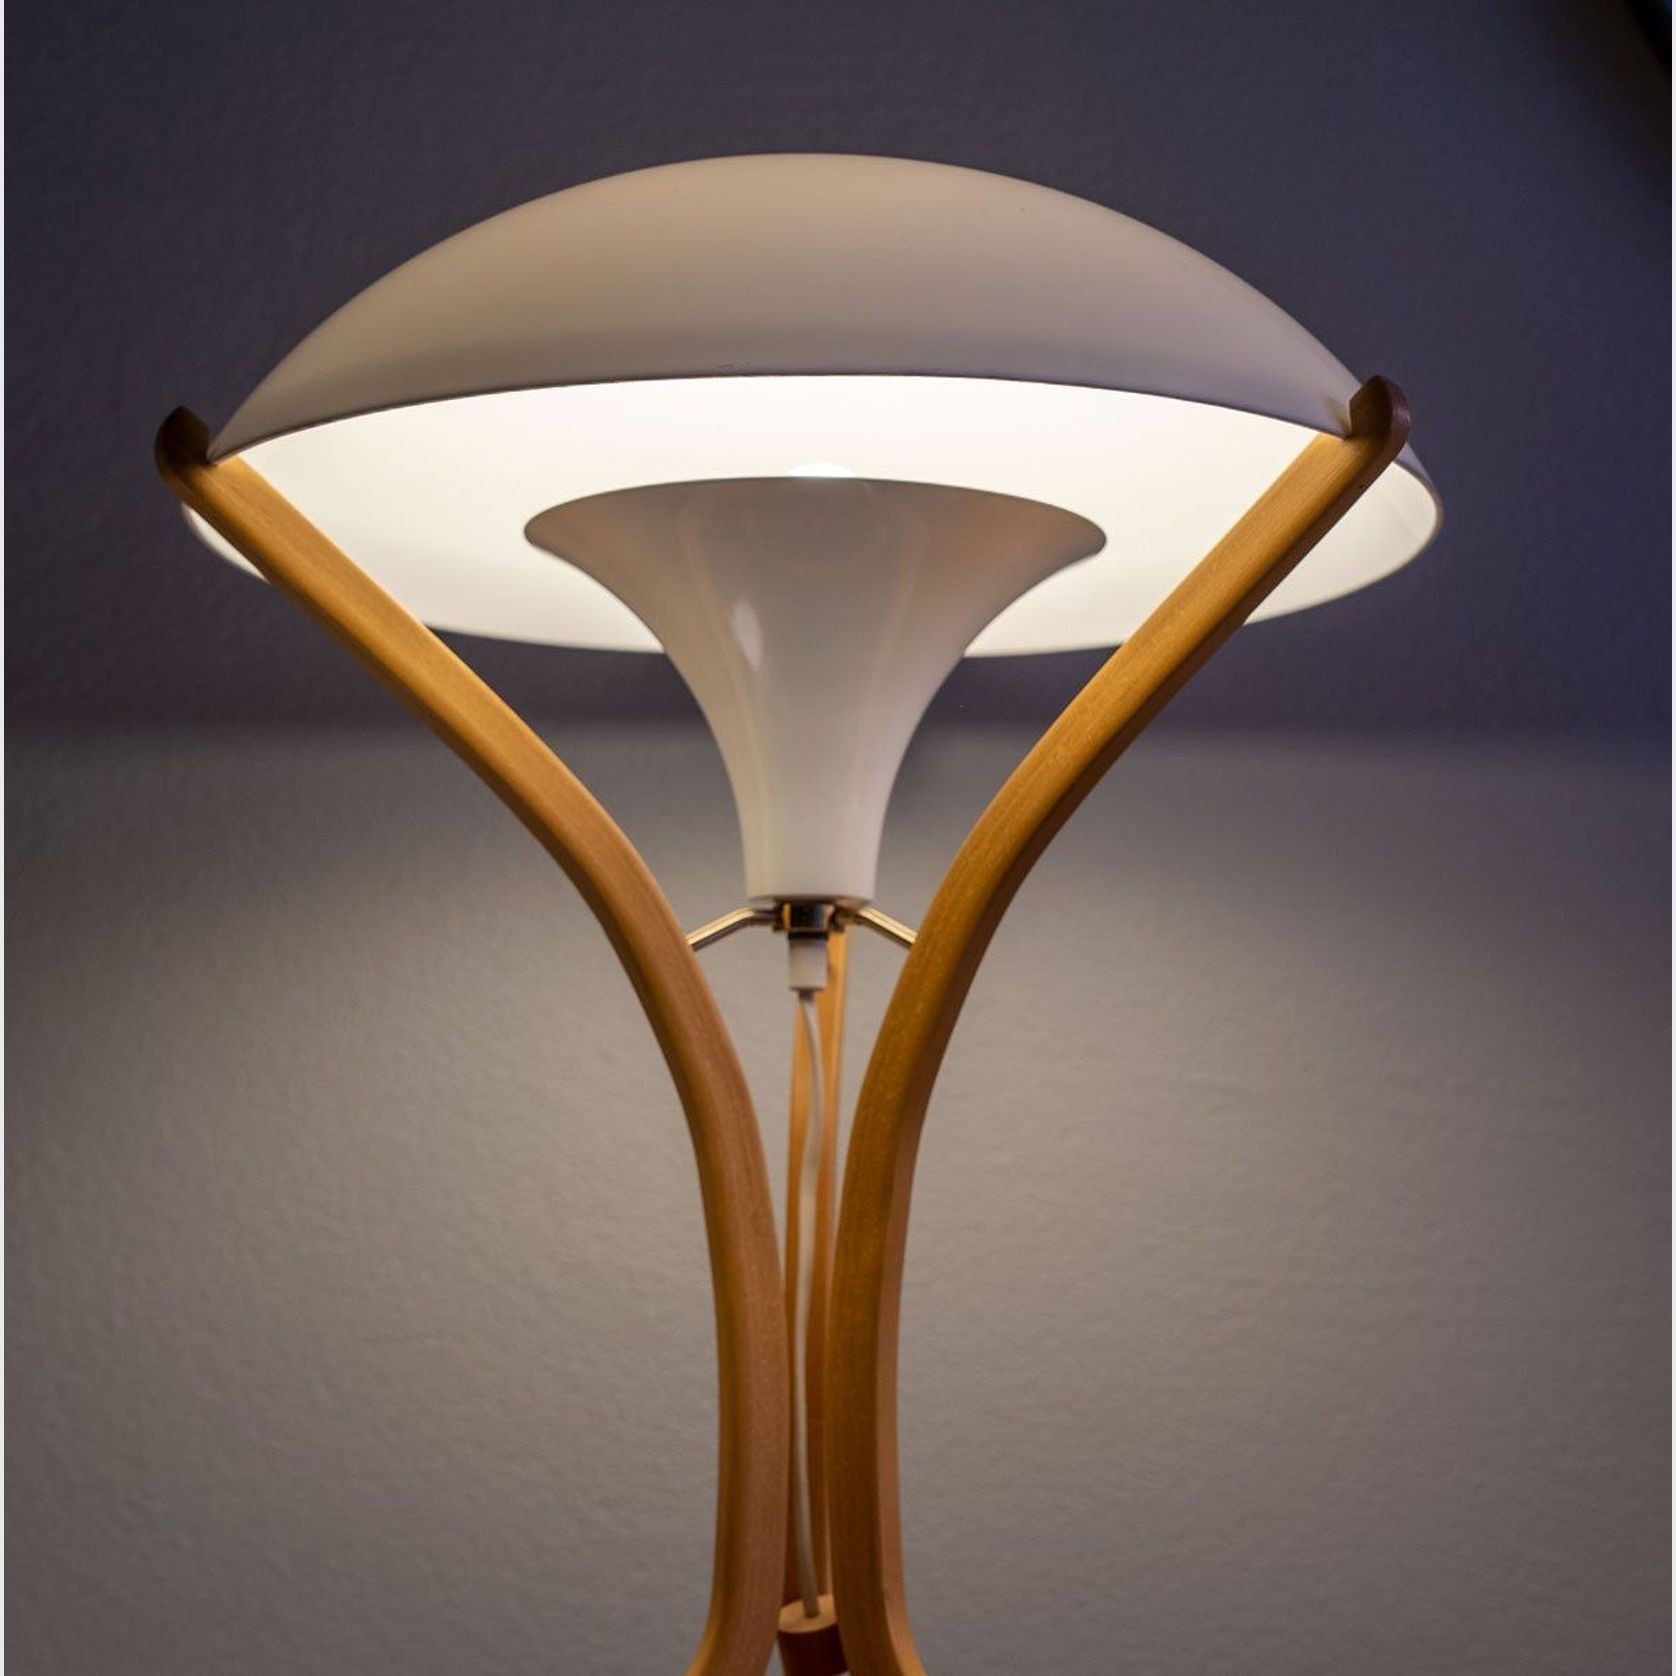 Cumulus Table Lamp By Jan Erik Lindgren gallery detail image